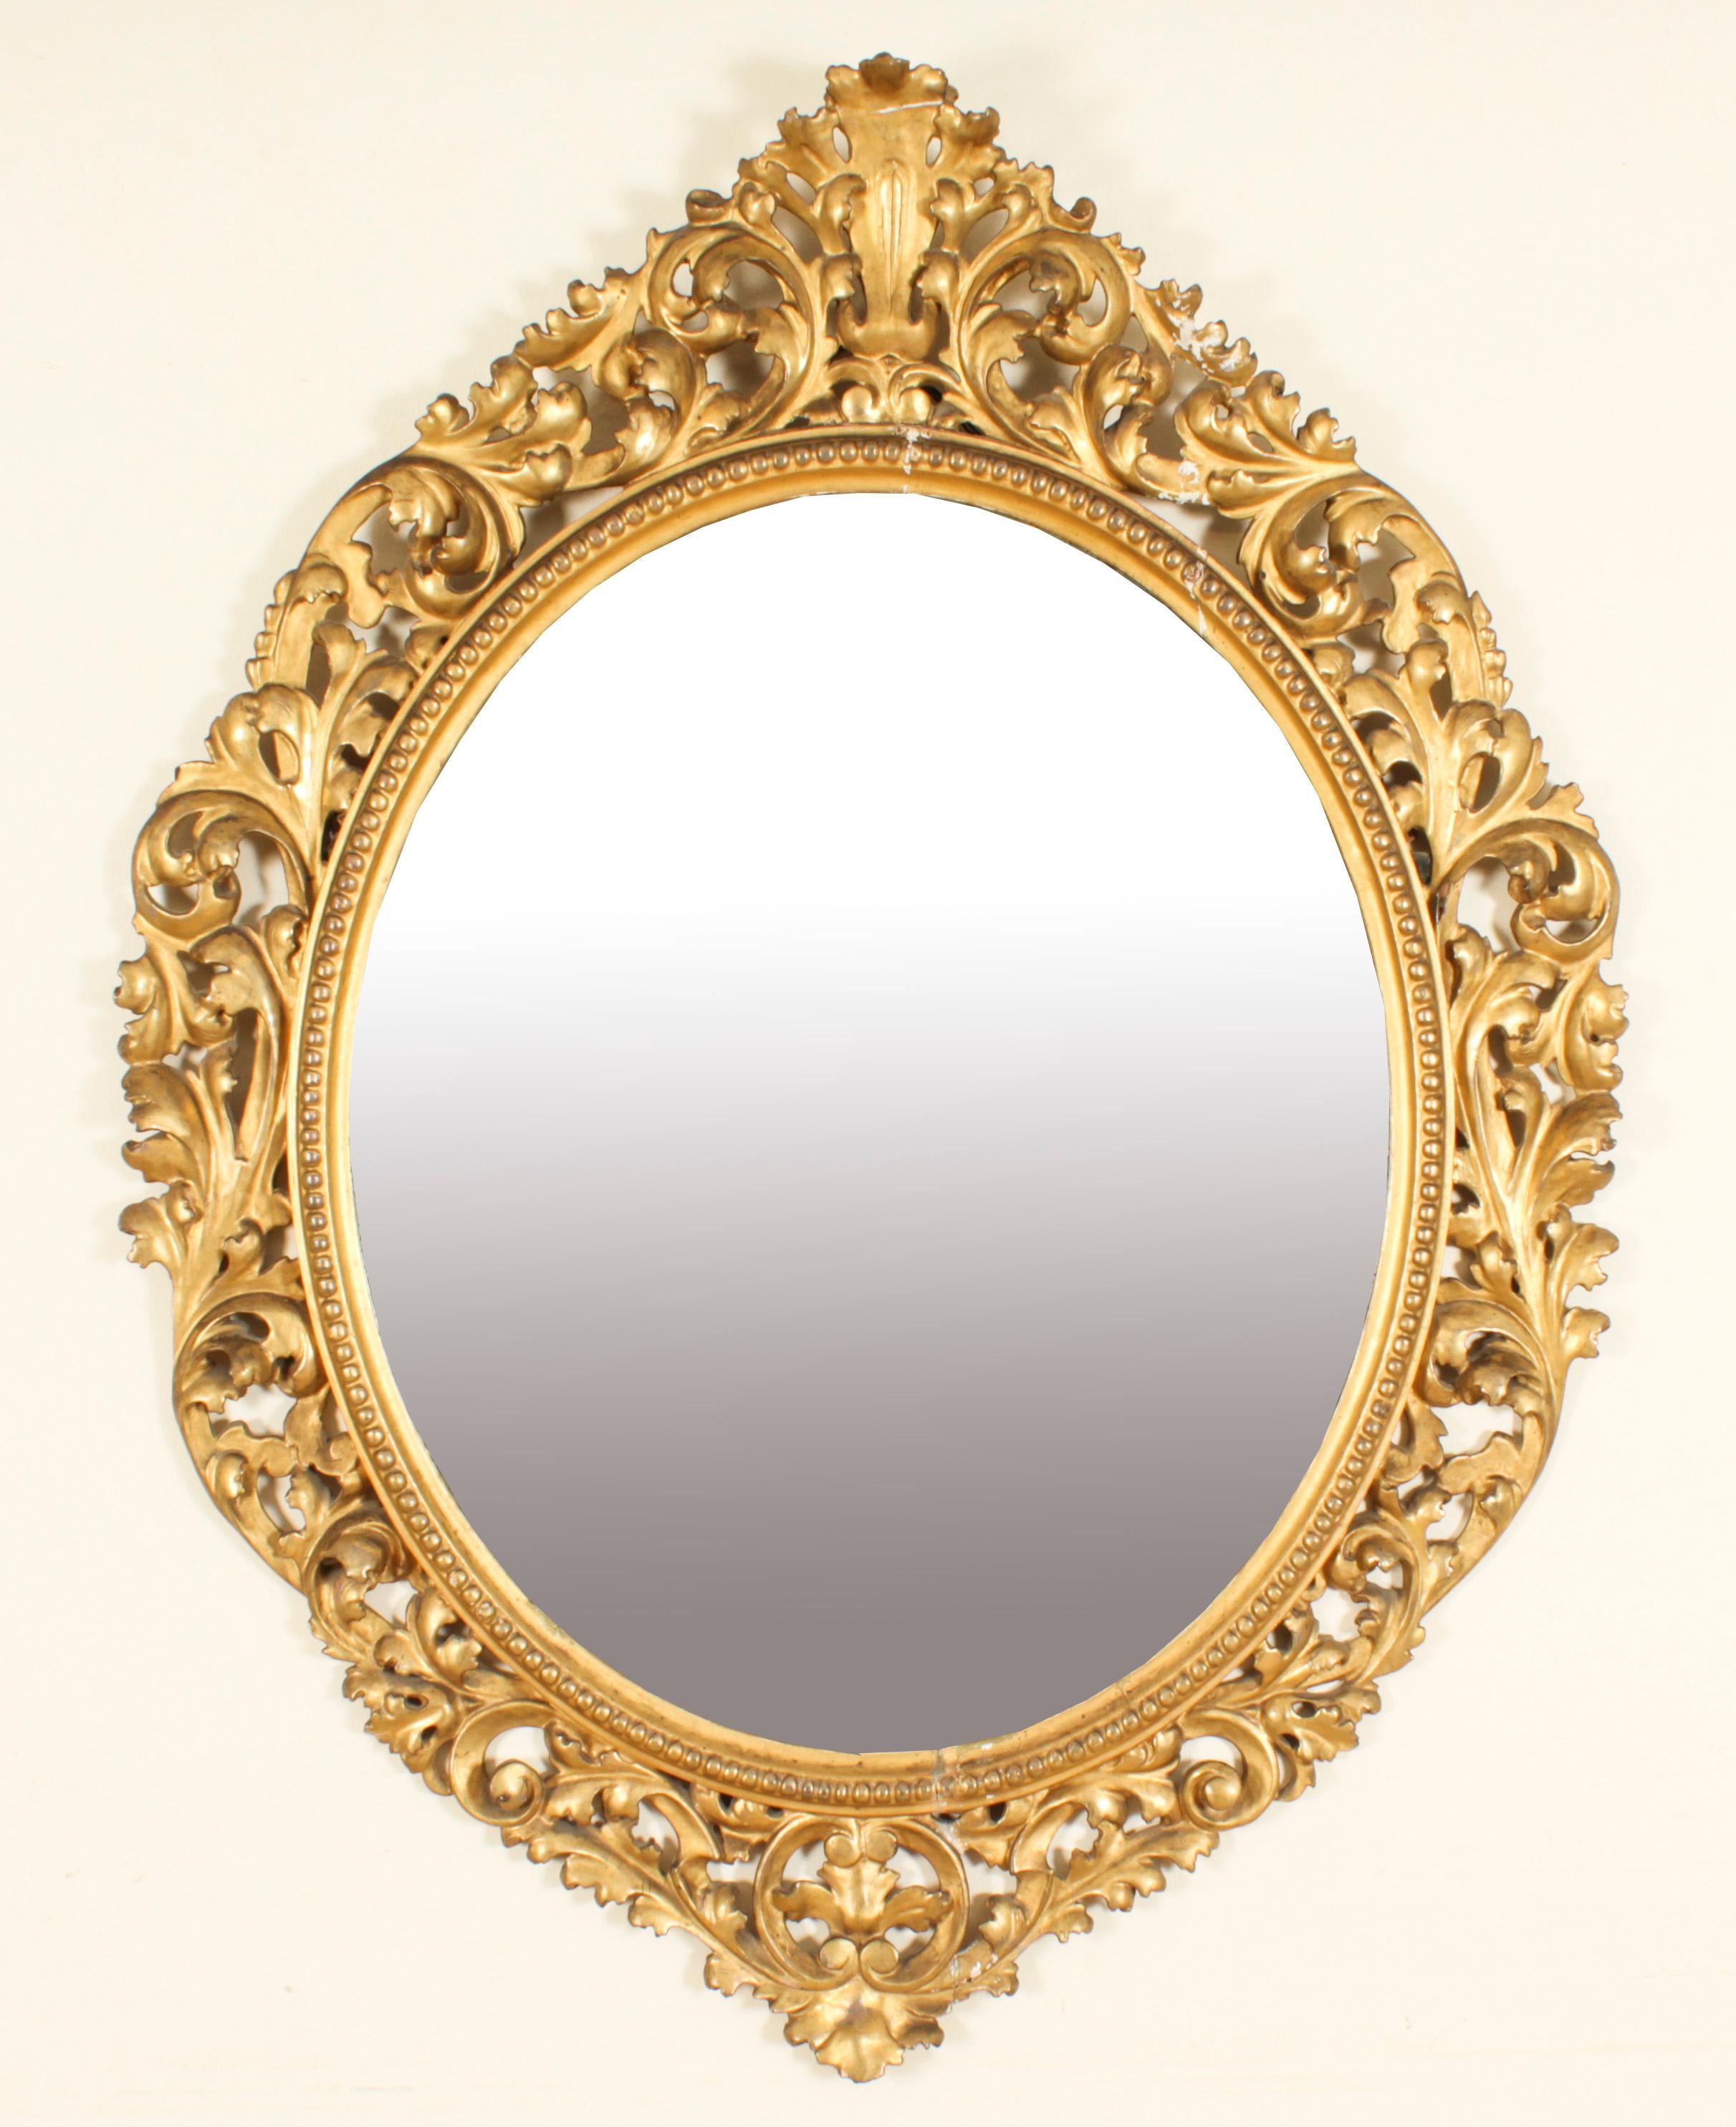 Antique Oval Florentine Giltwood Mirror 19th Century 120x92cm For Sale 1